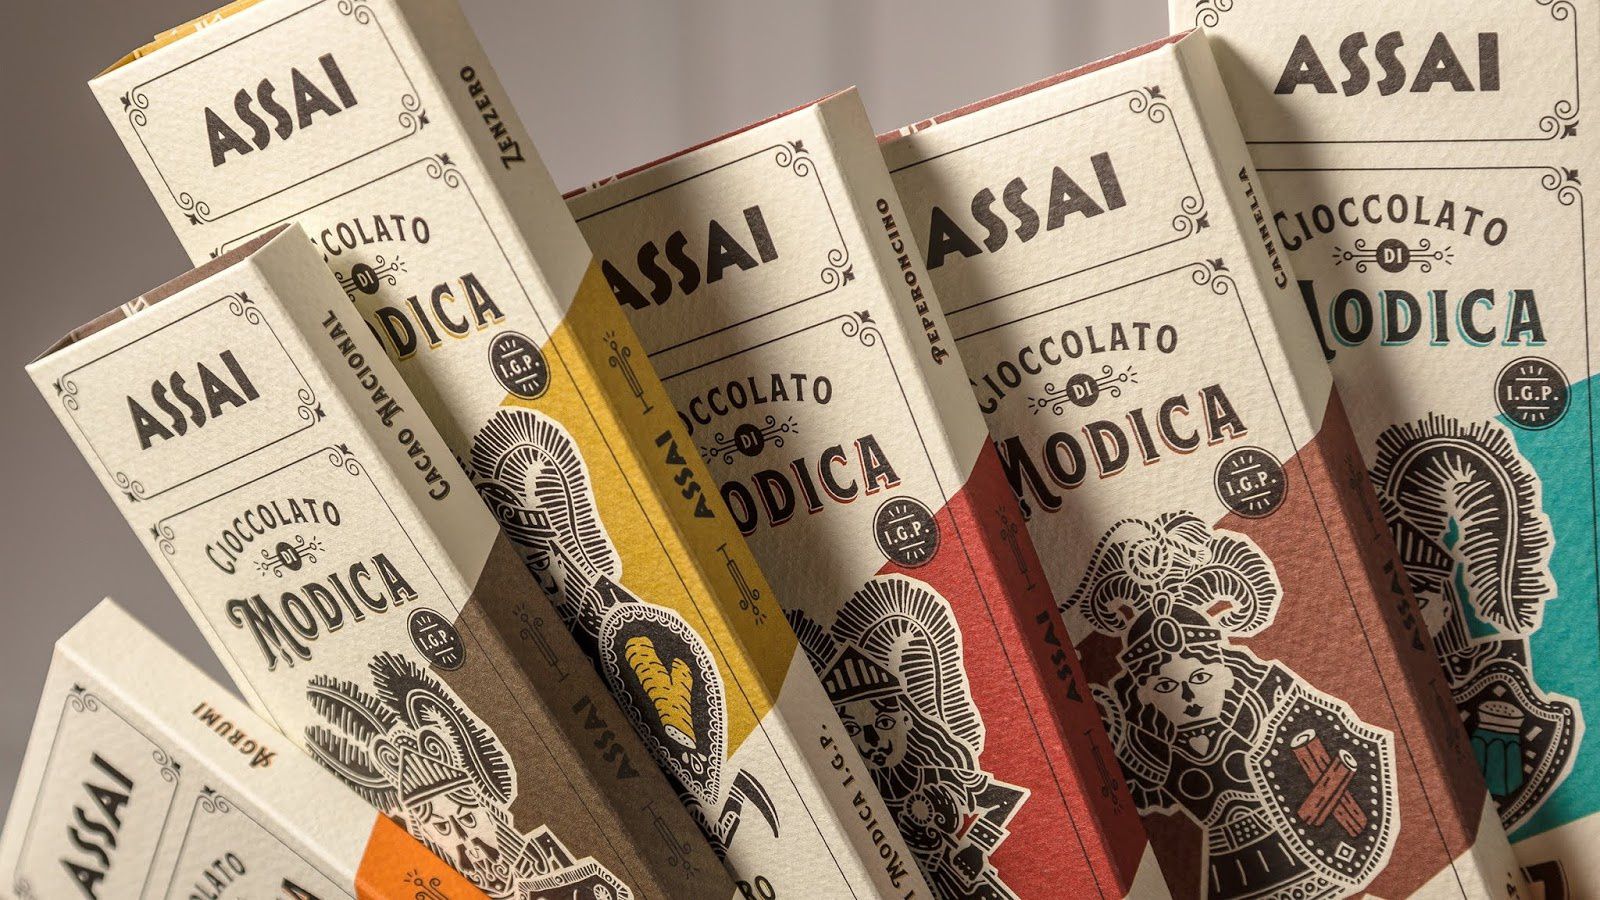 ASSAI Modica Chocolate (chocolat artisanal inspiré du théâtre de marionnettes sicilien "Opera dei Pupi") I Design : Happycentro, Verone, Italie (juin 2019)